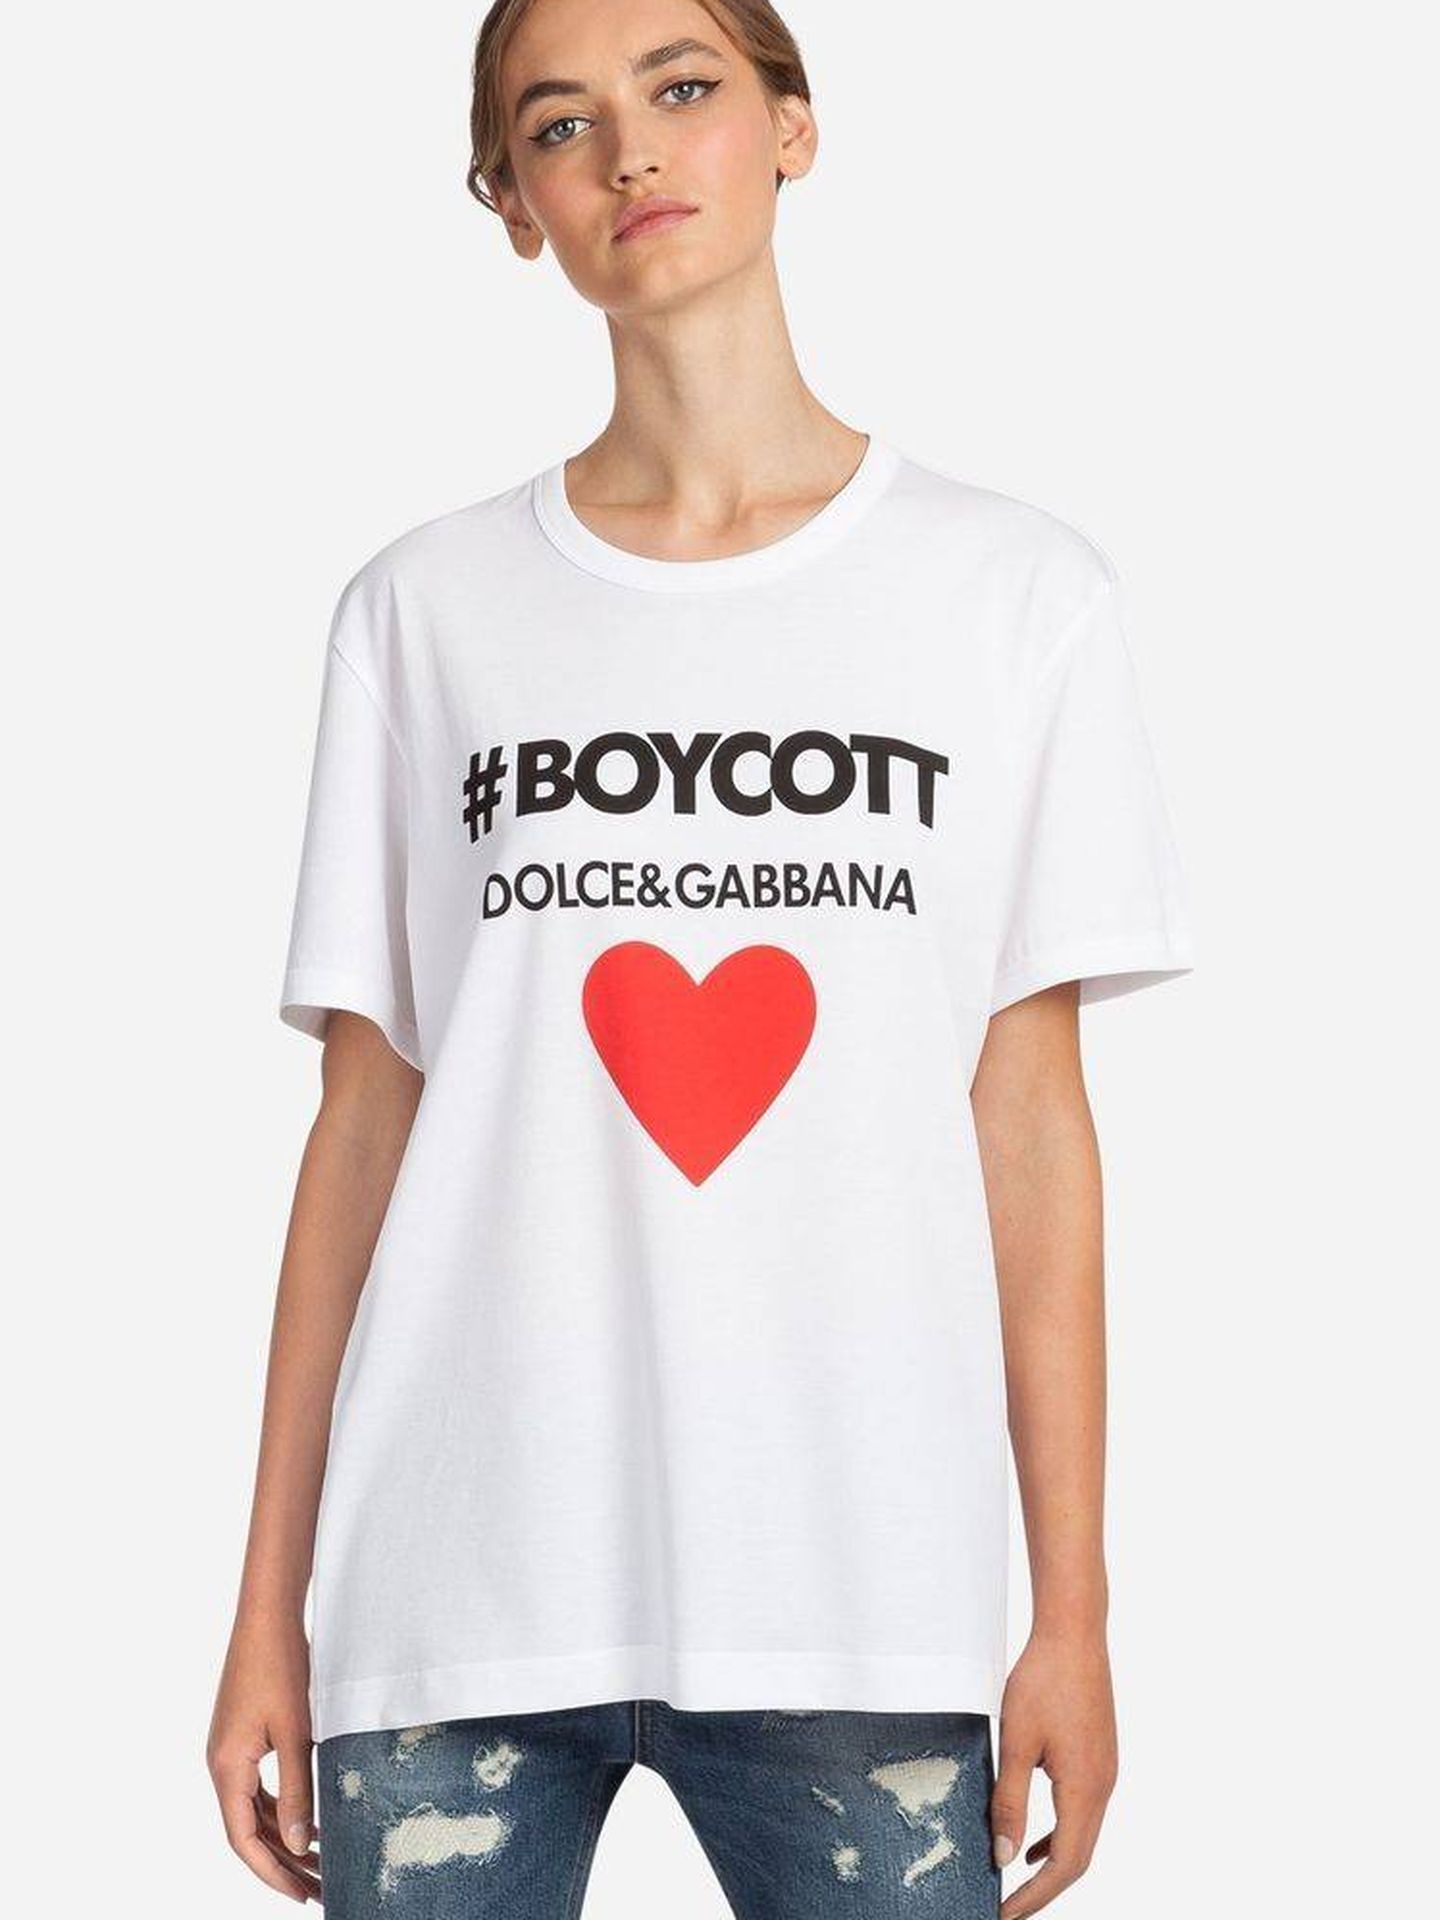 Imagen: Dolce & Gabbana.